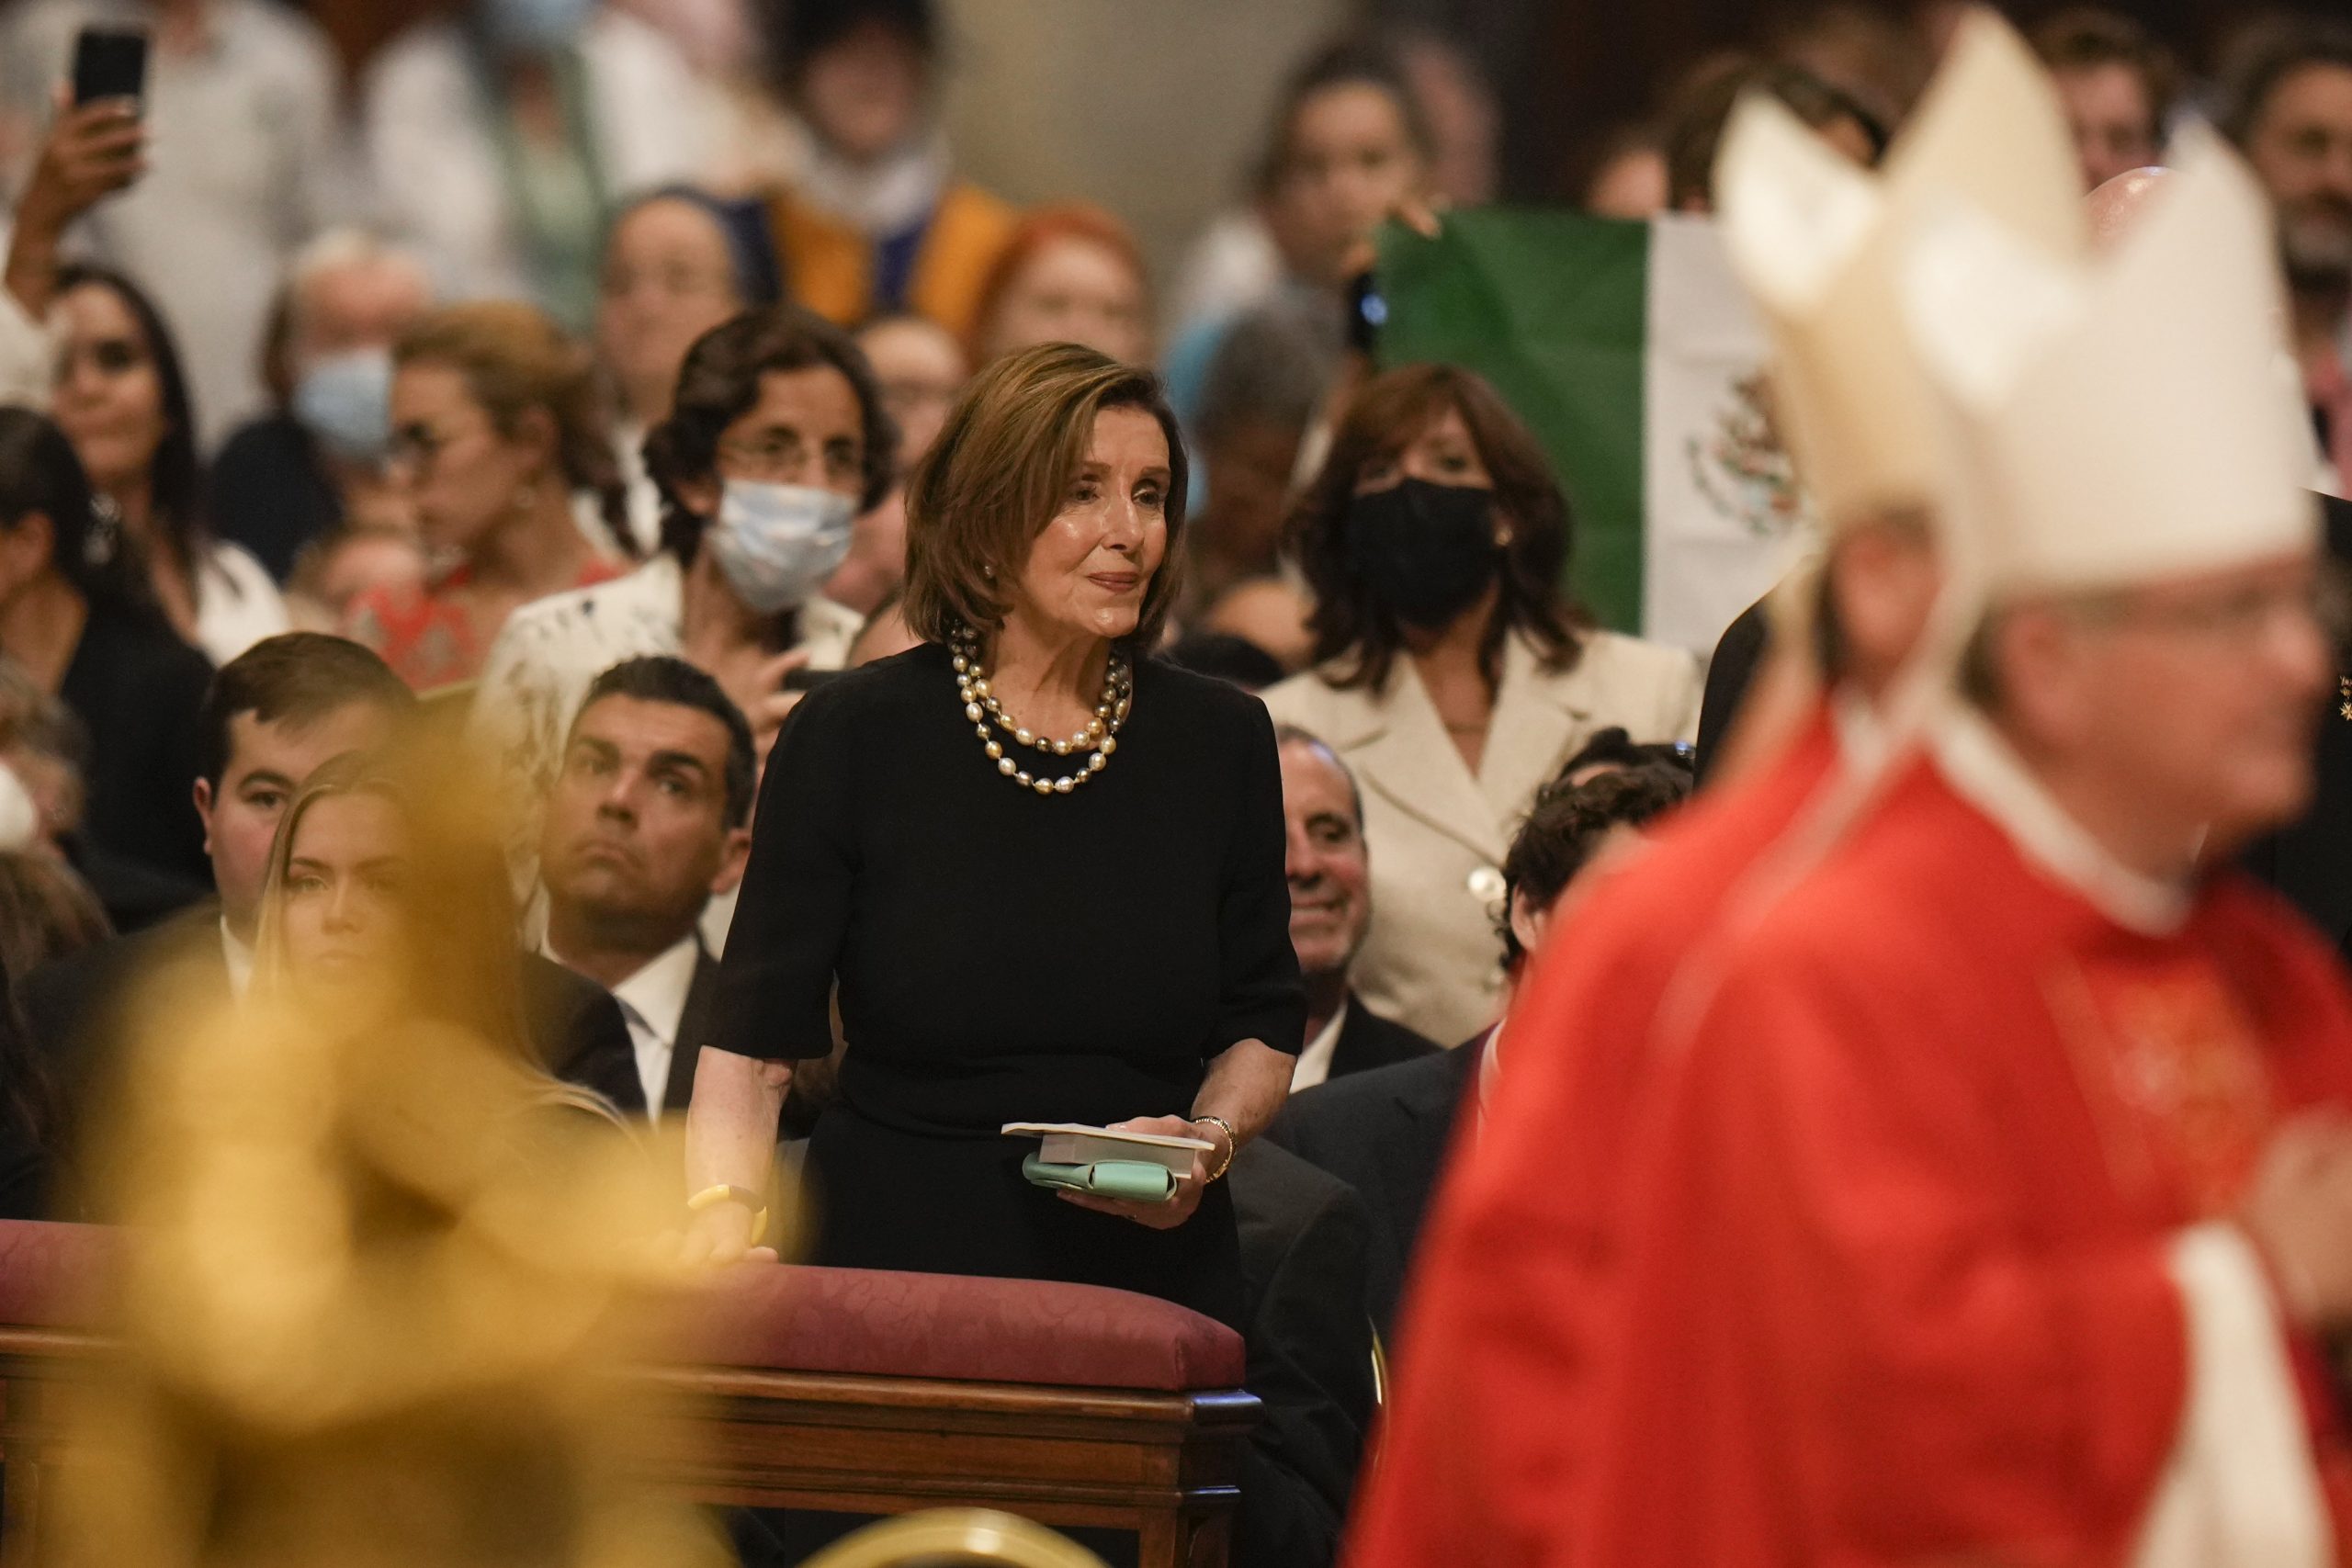 Pelosi receives Communion in Vatican despite abortion stance